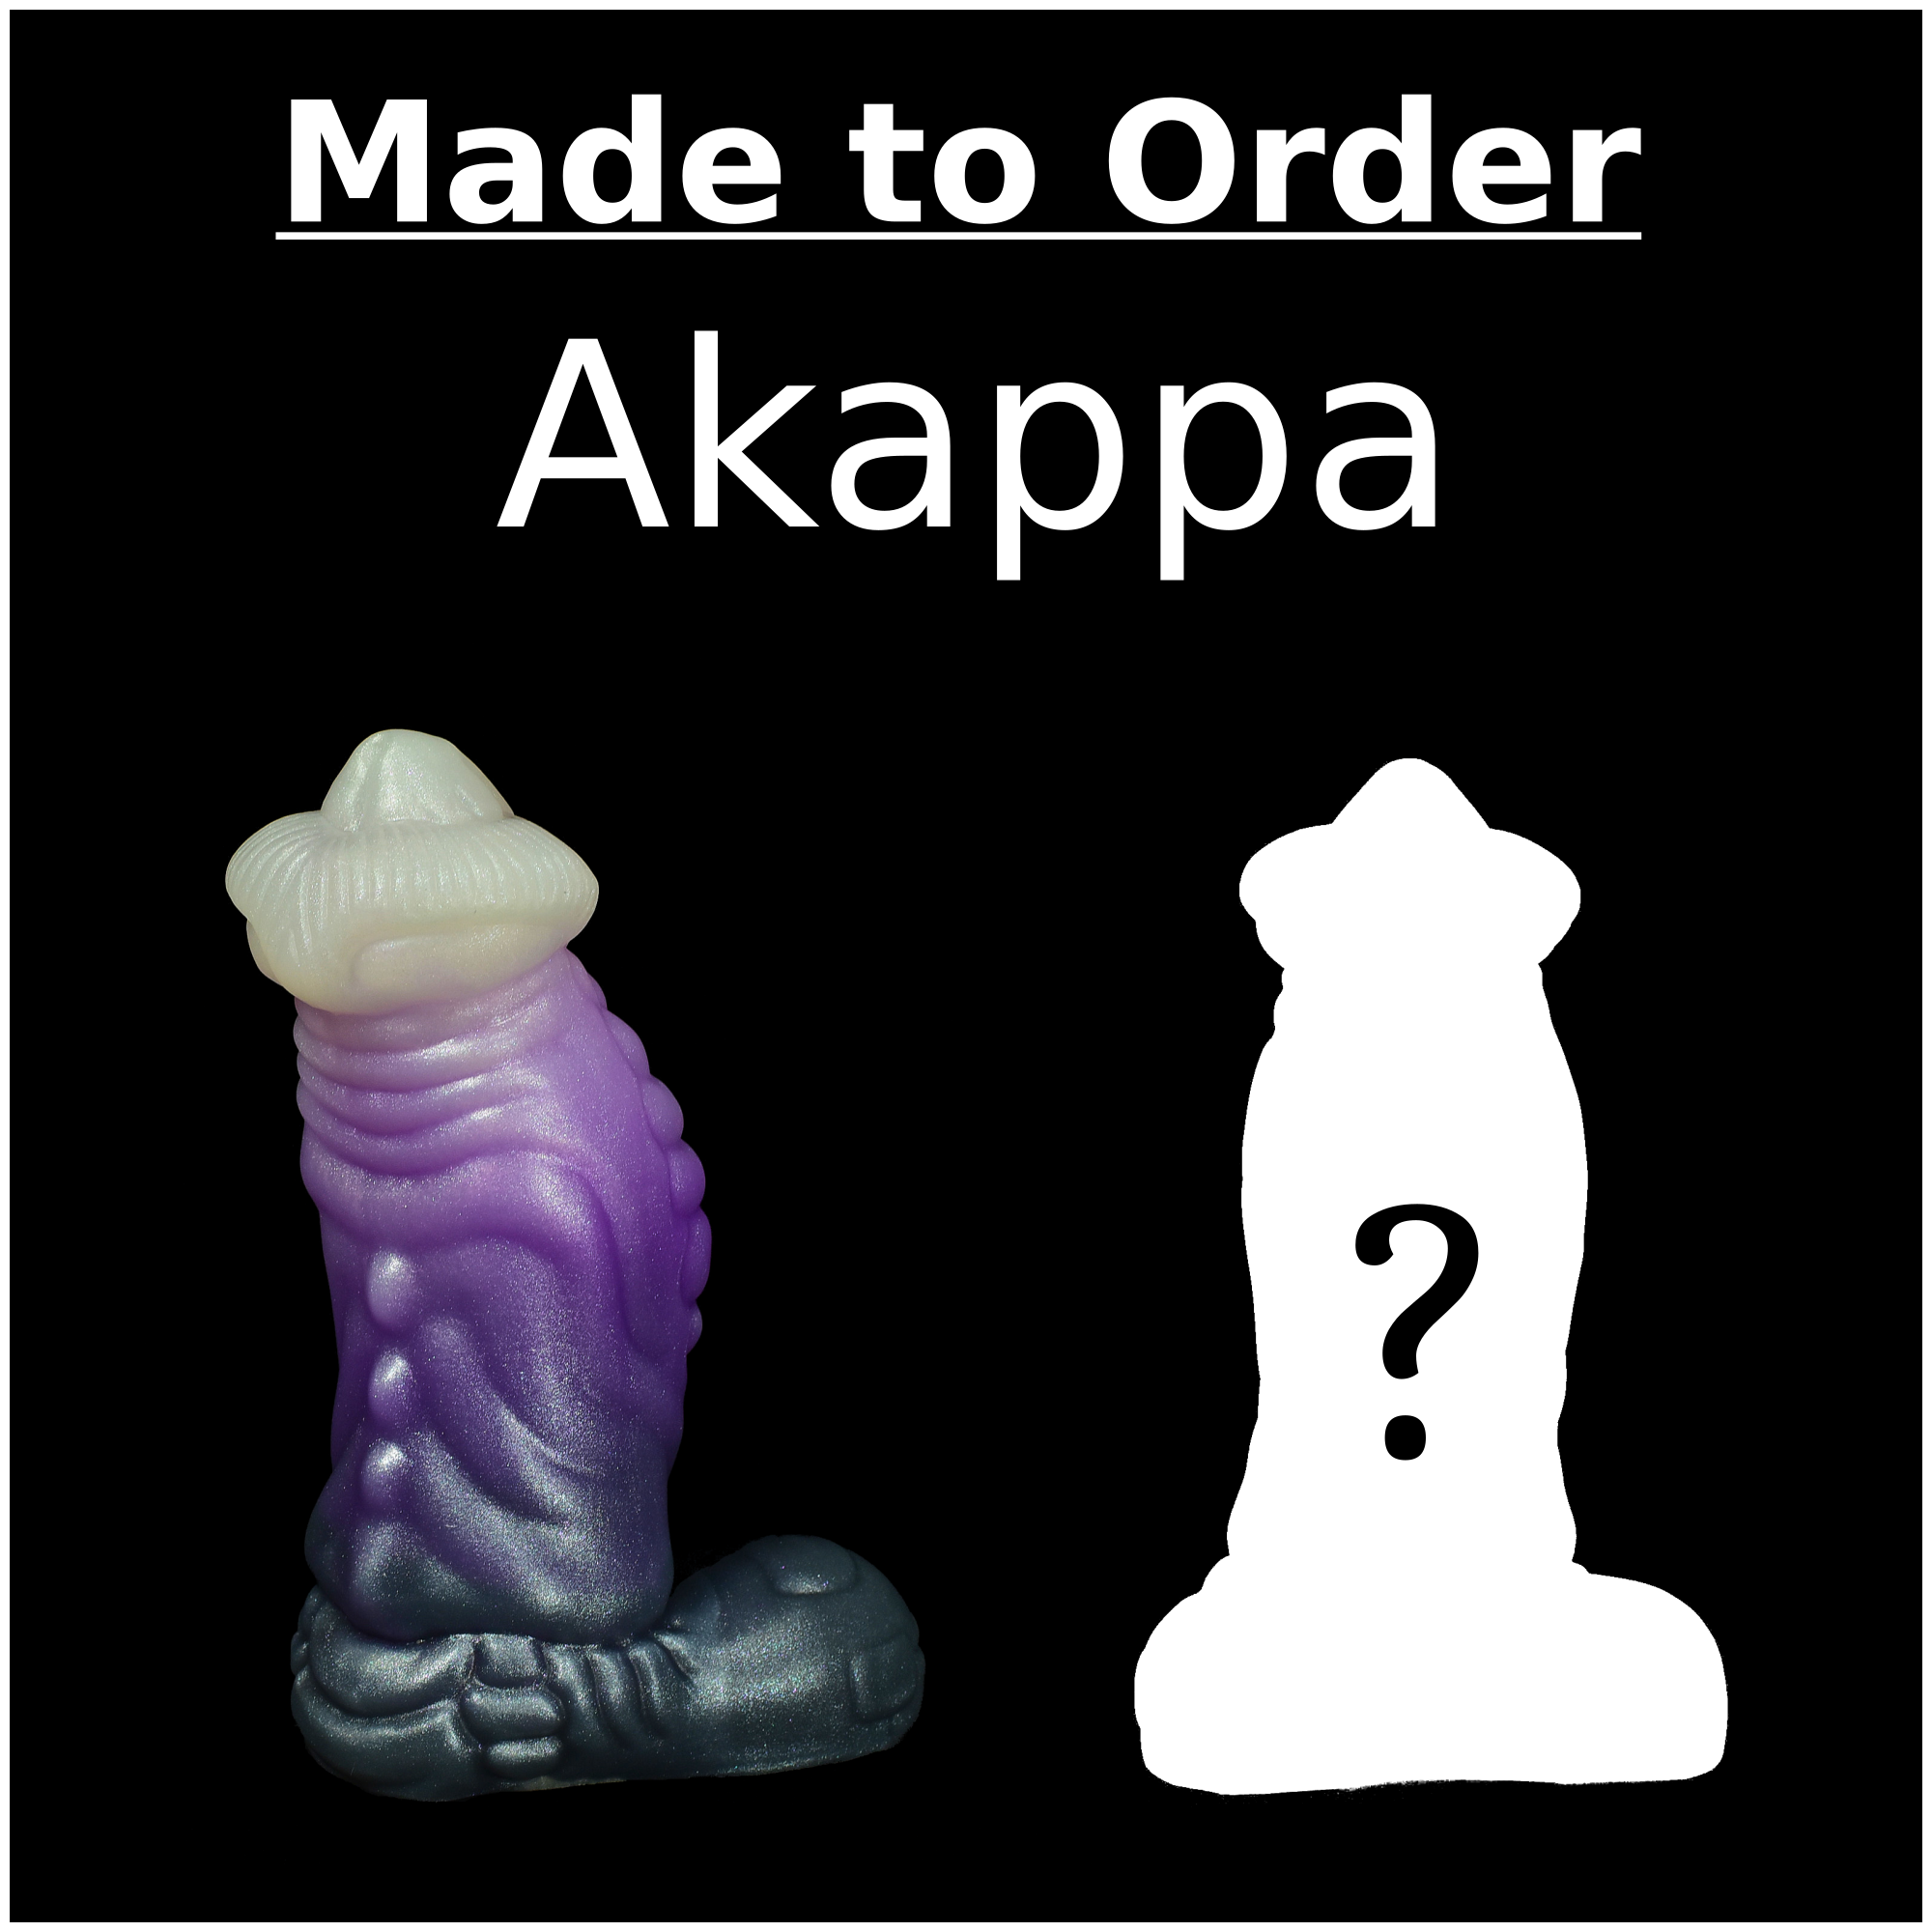 Made to Order Akappa